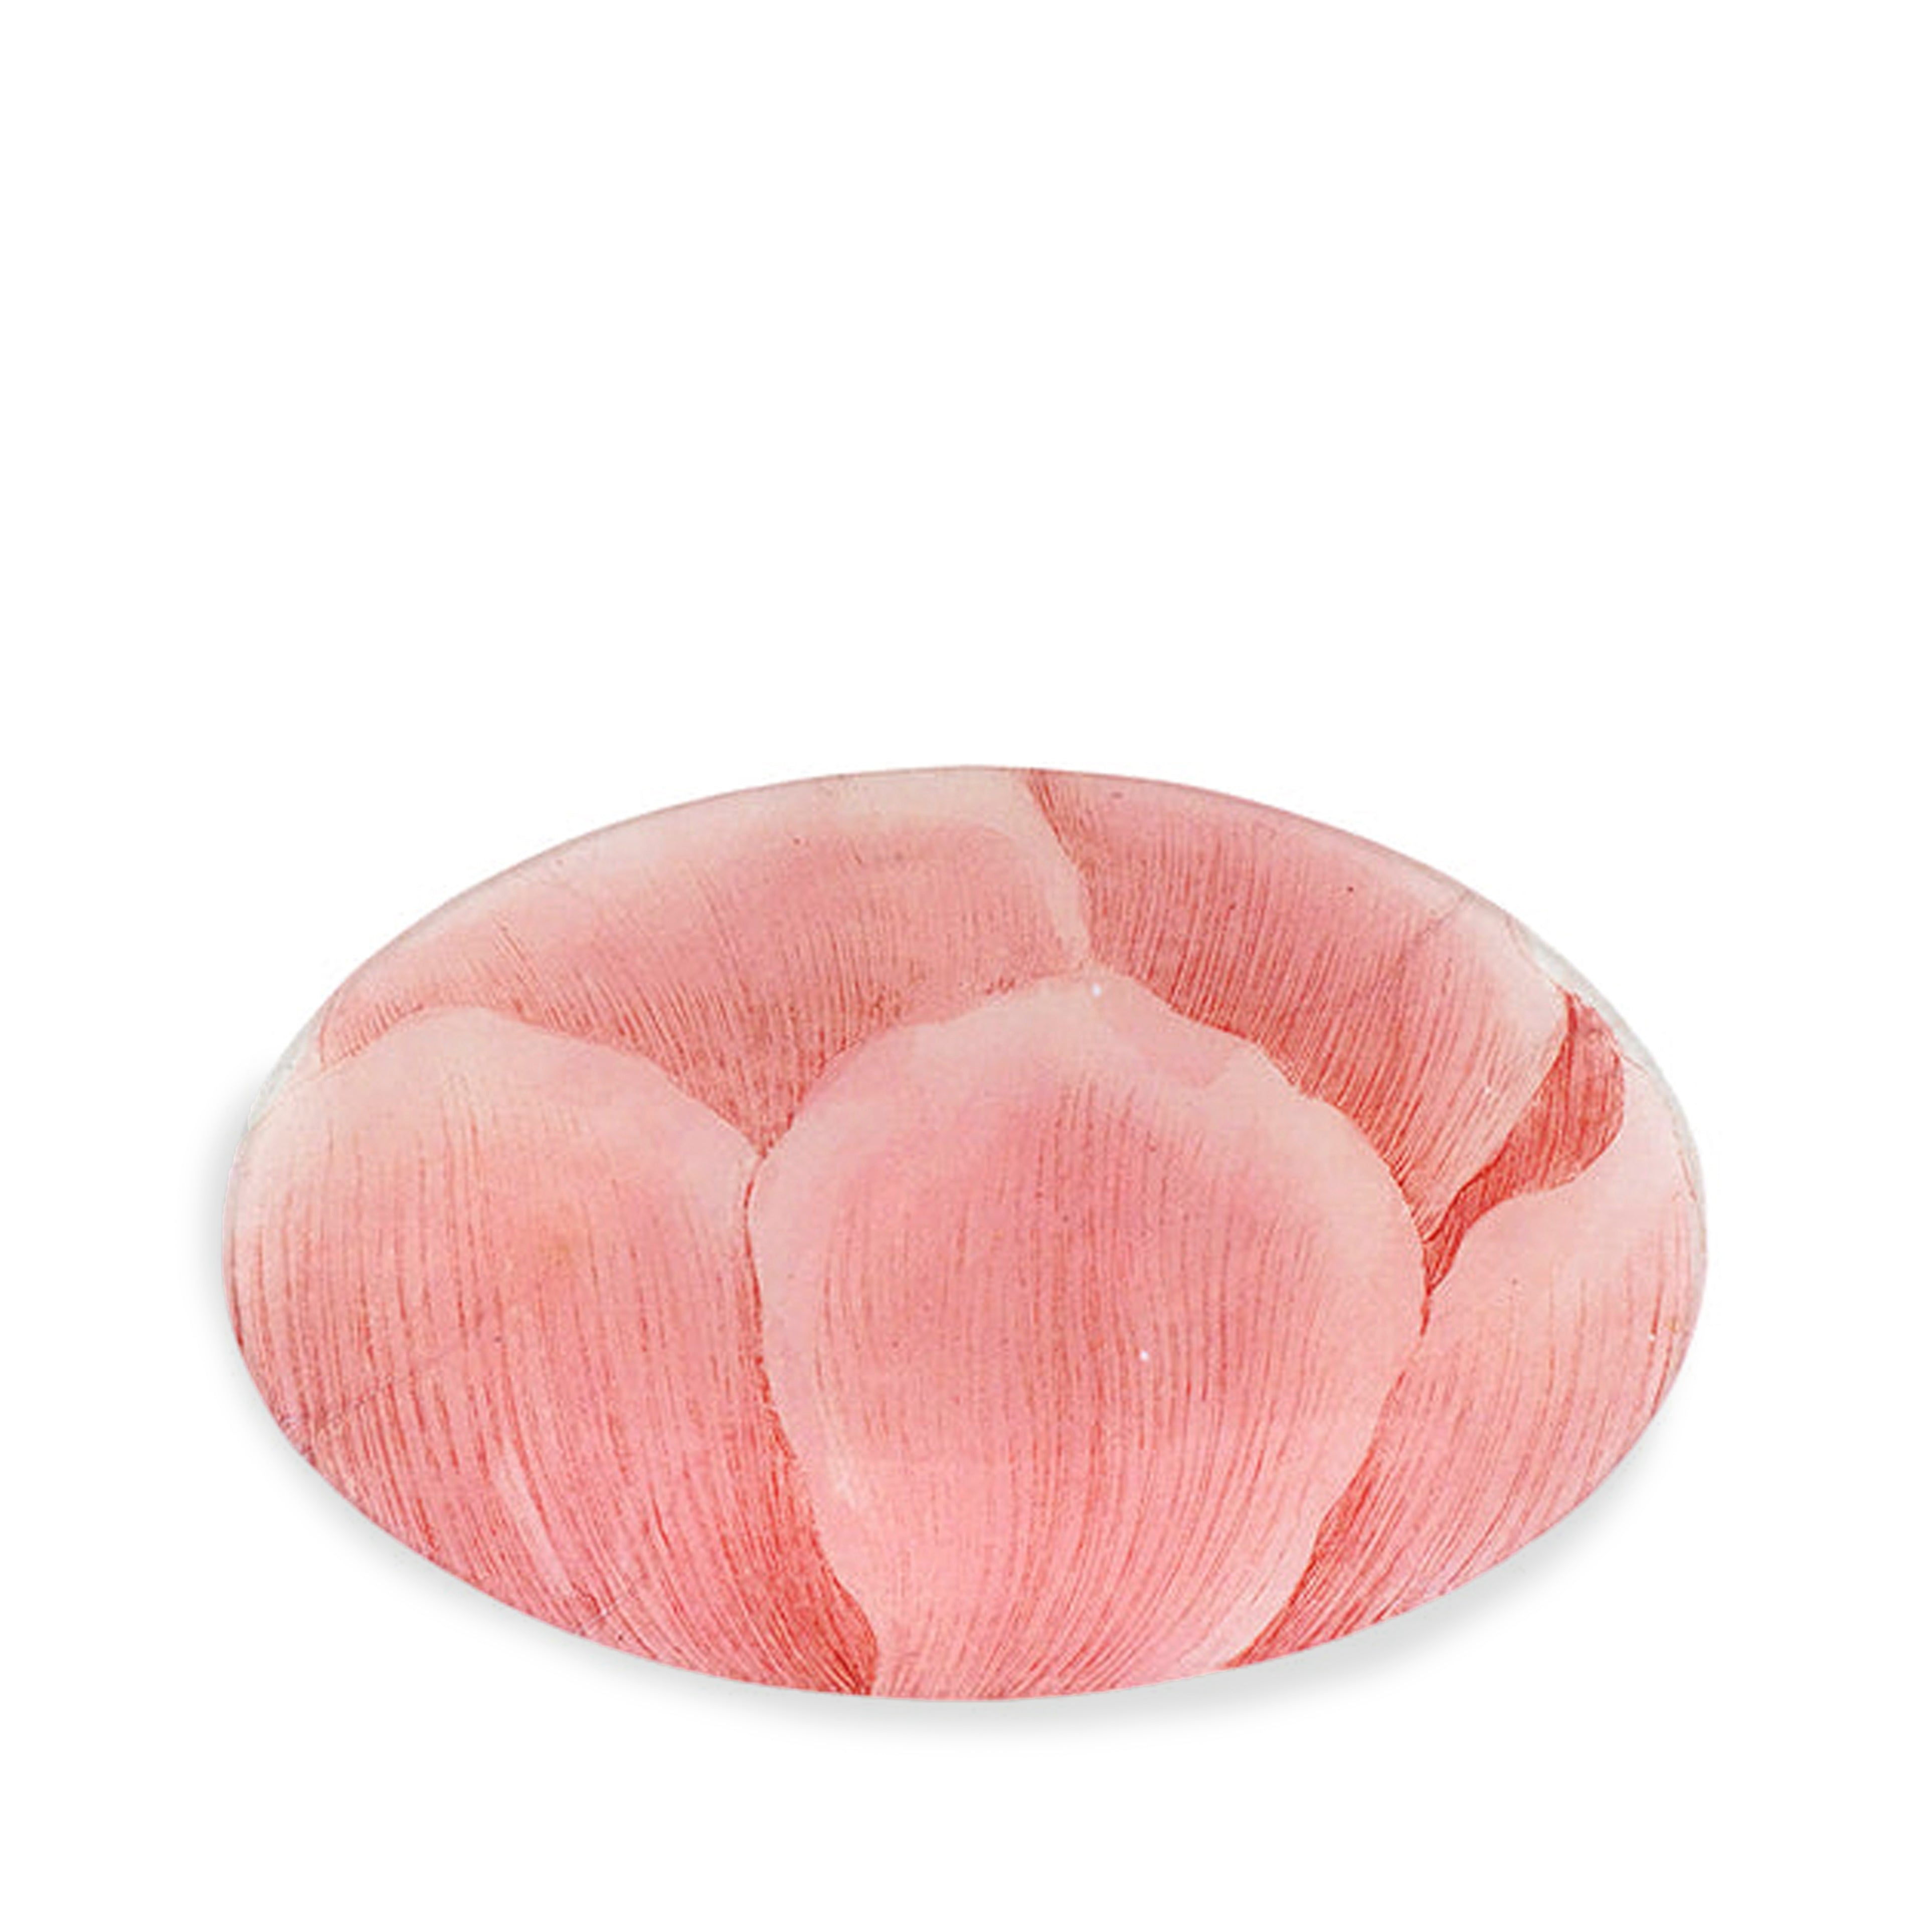 John Derian Pale Pink Poppy Platter, 23x35cm